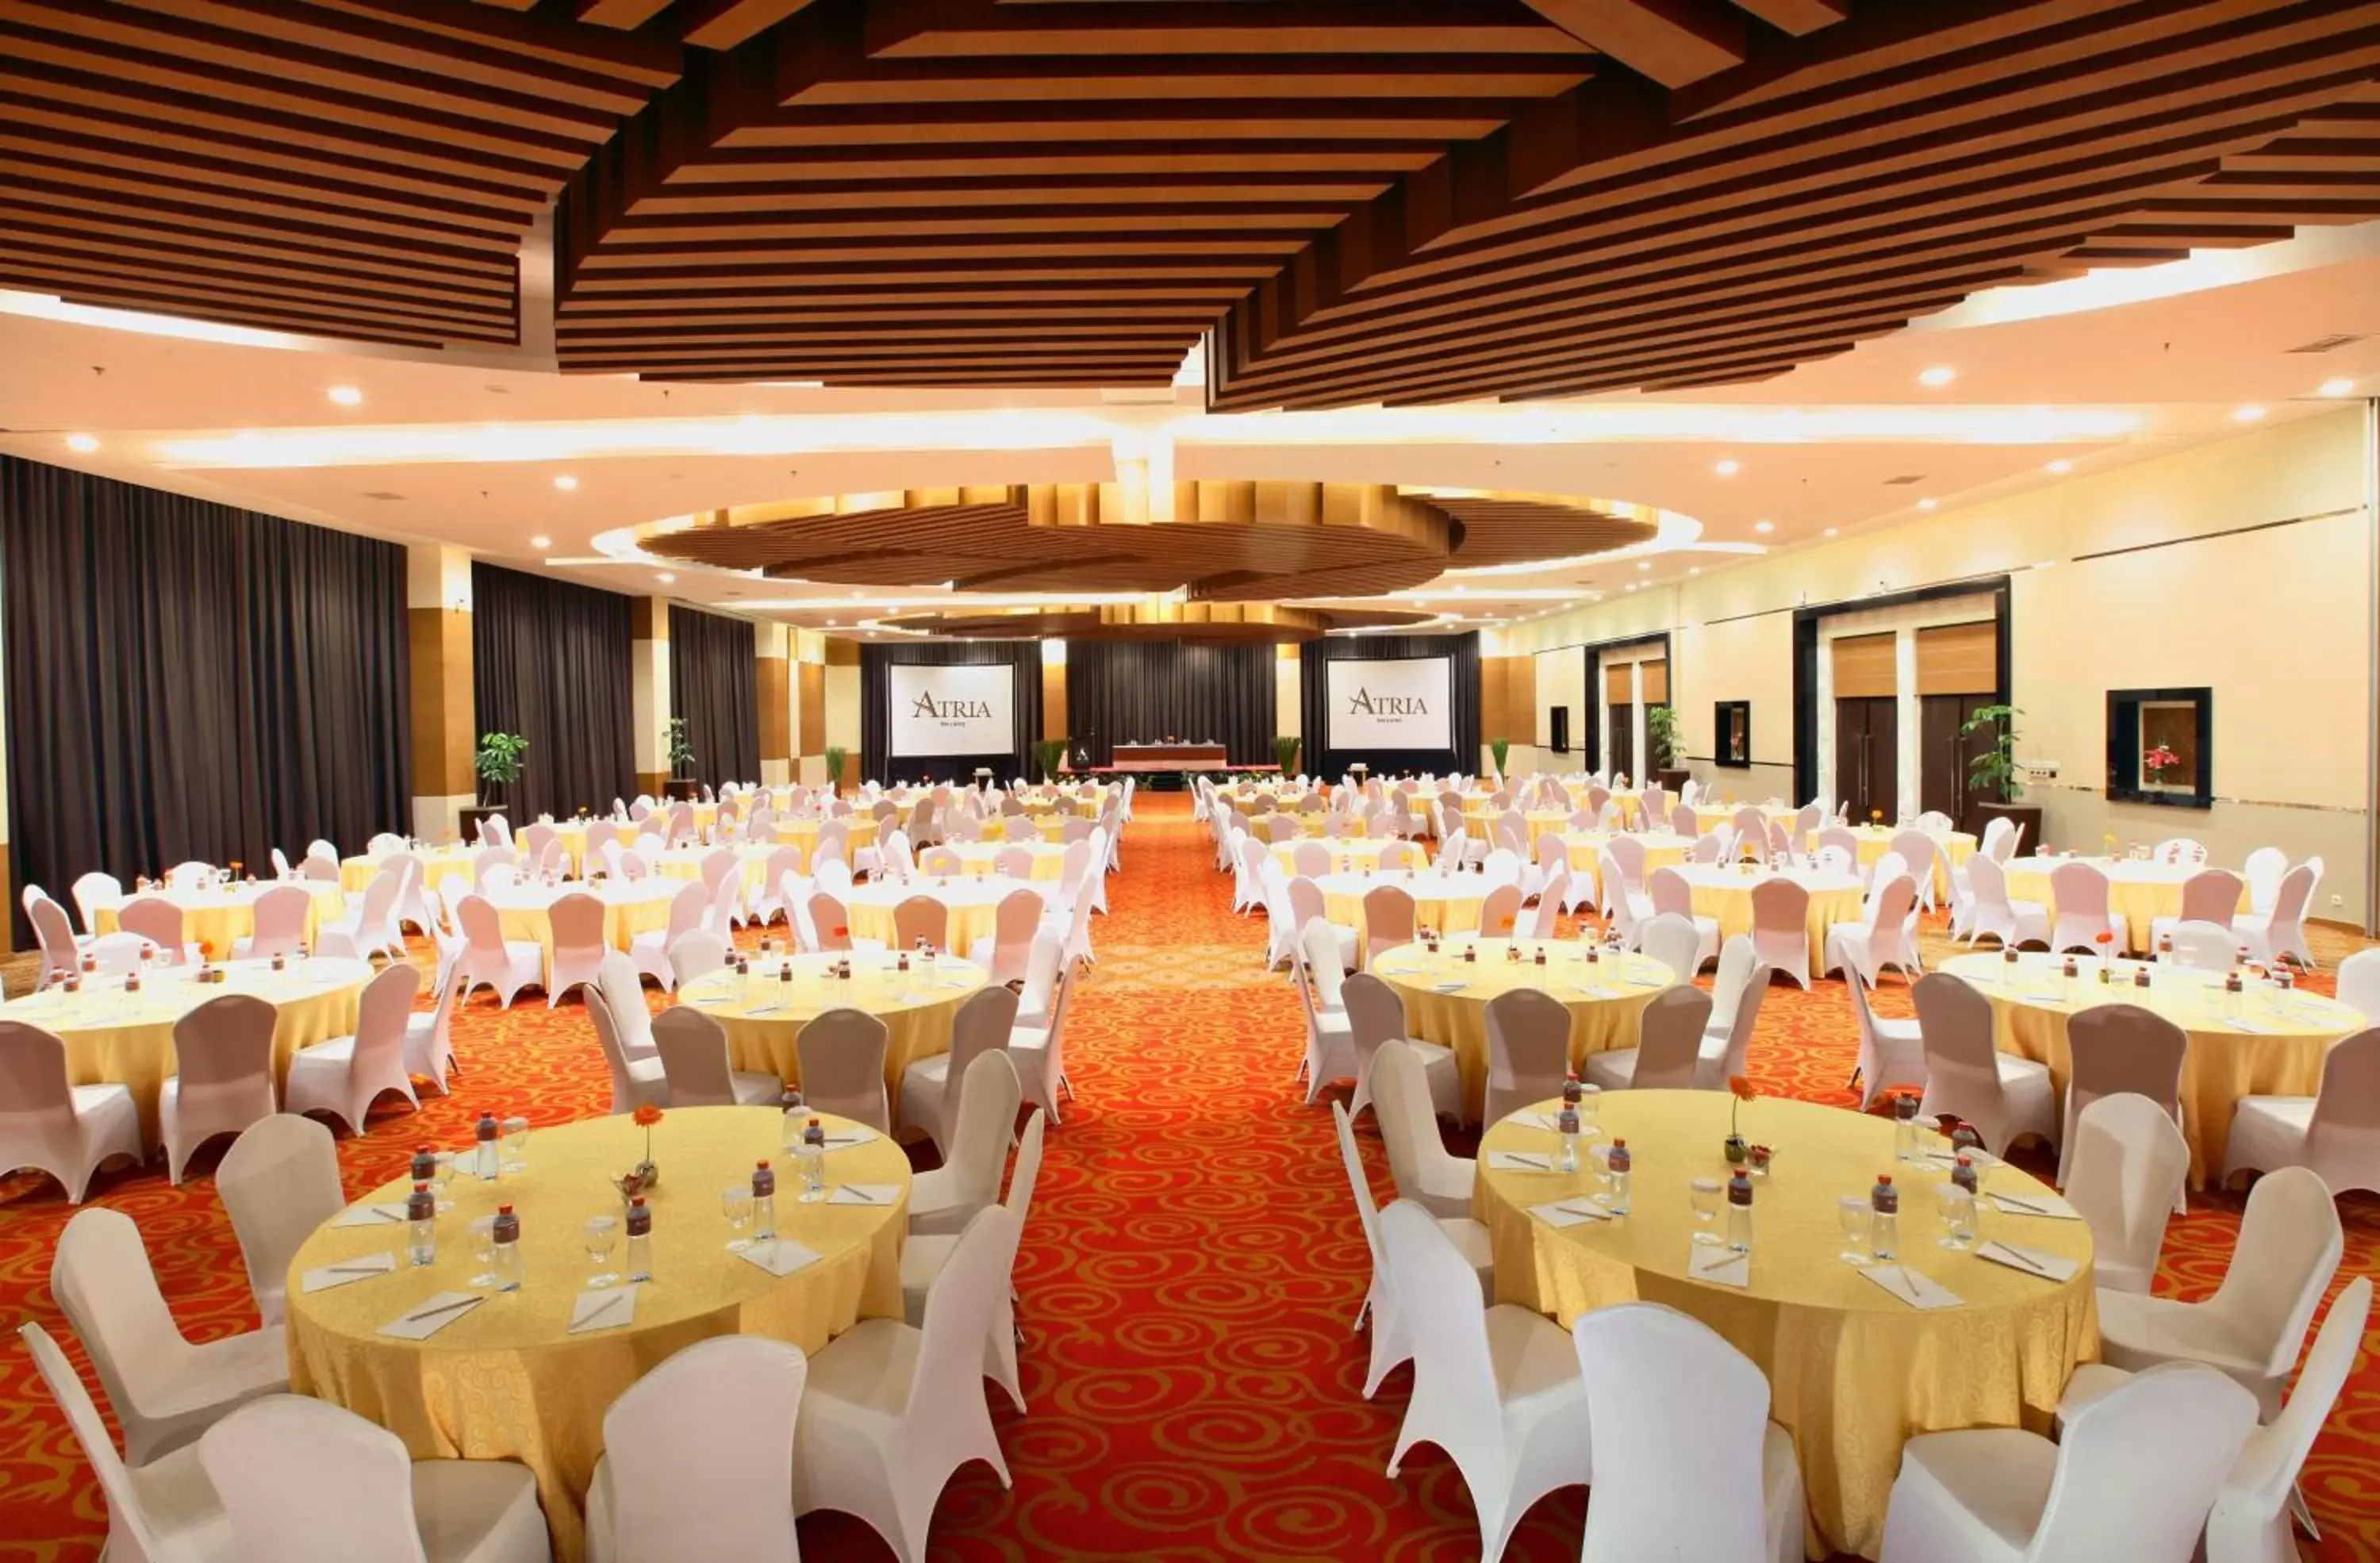 Business facilities, Banquet Facilities in Atria Hotel Malang